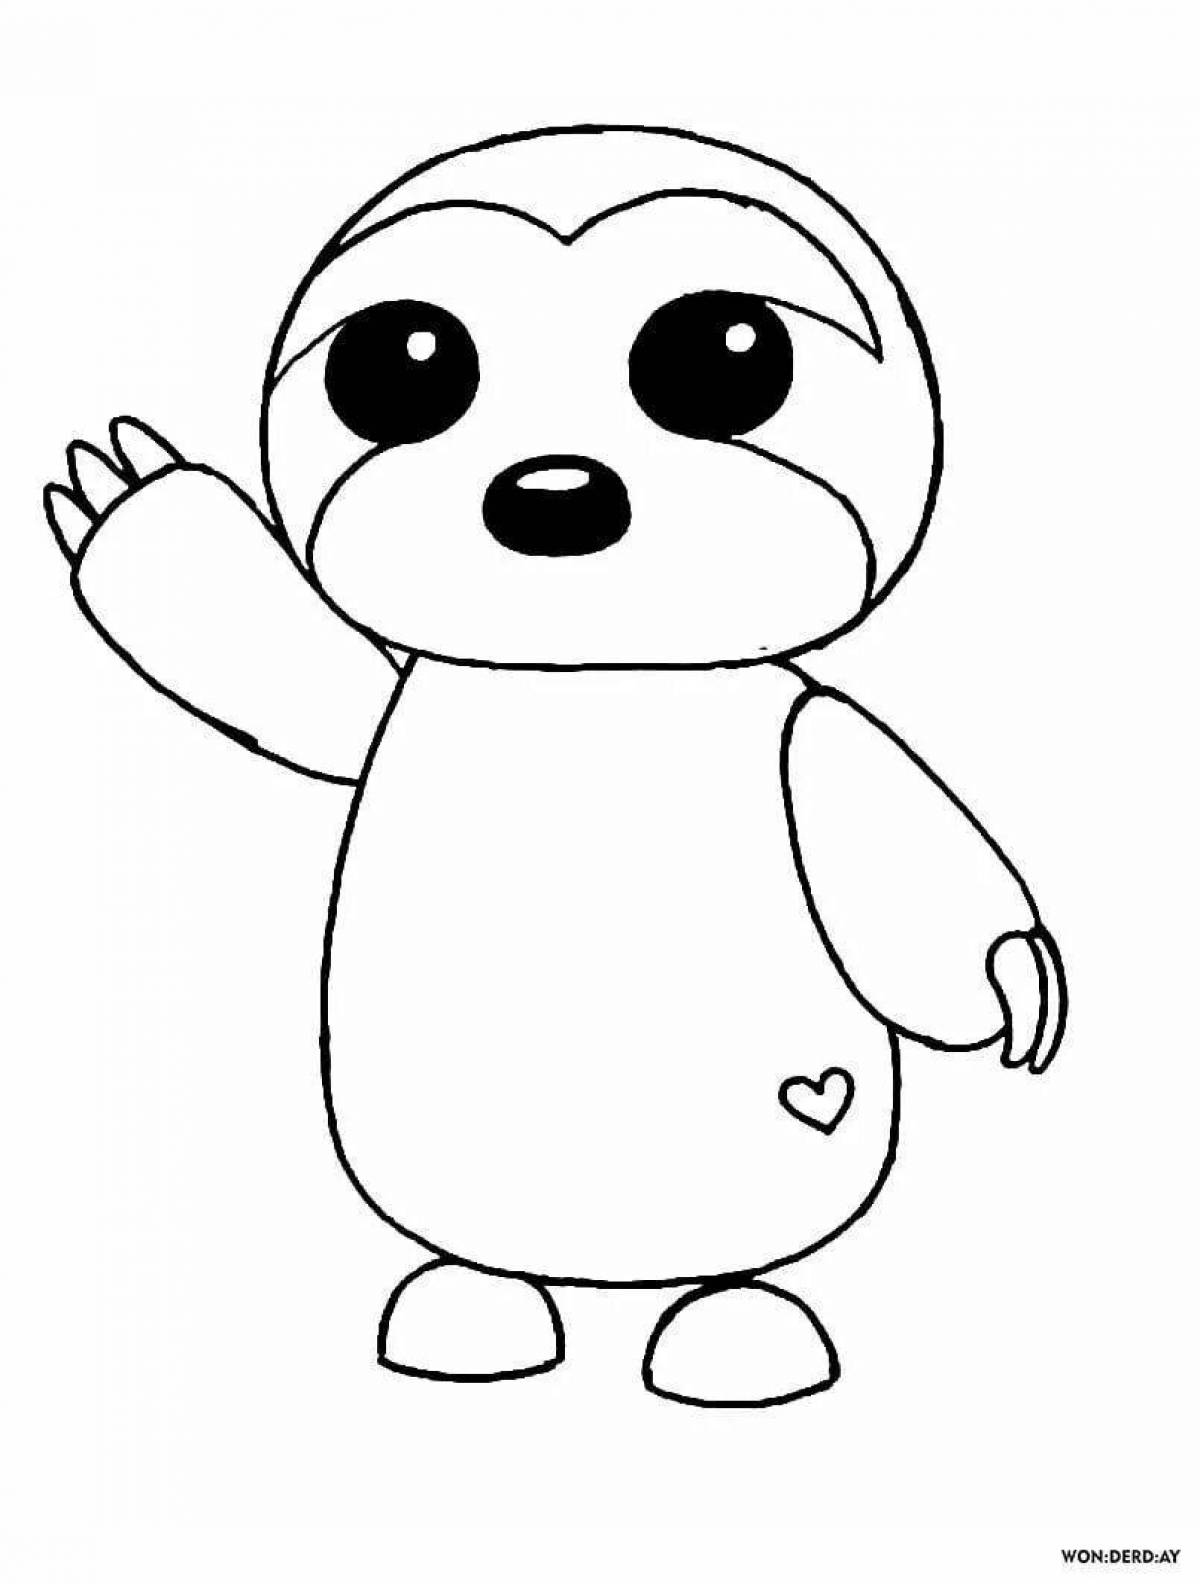 Great panda adopt me coloring page